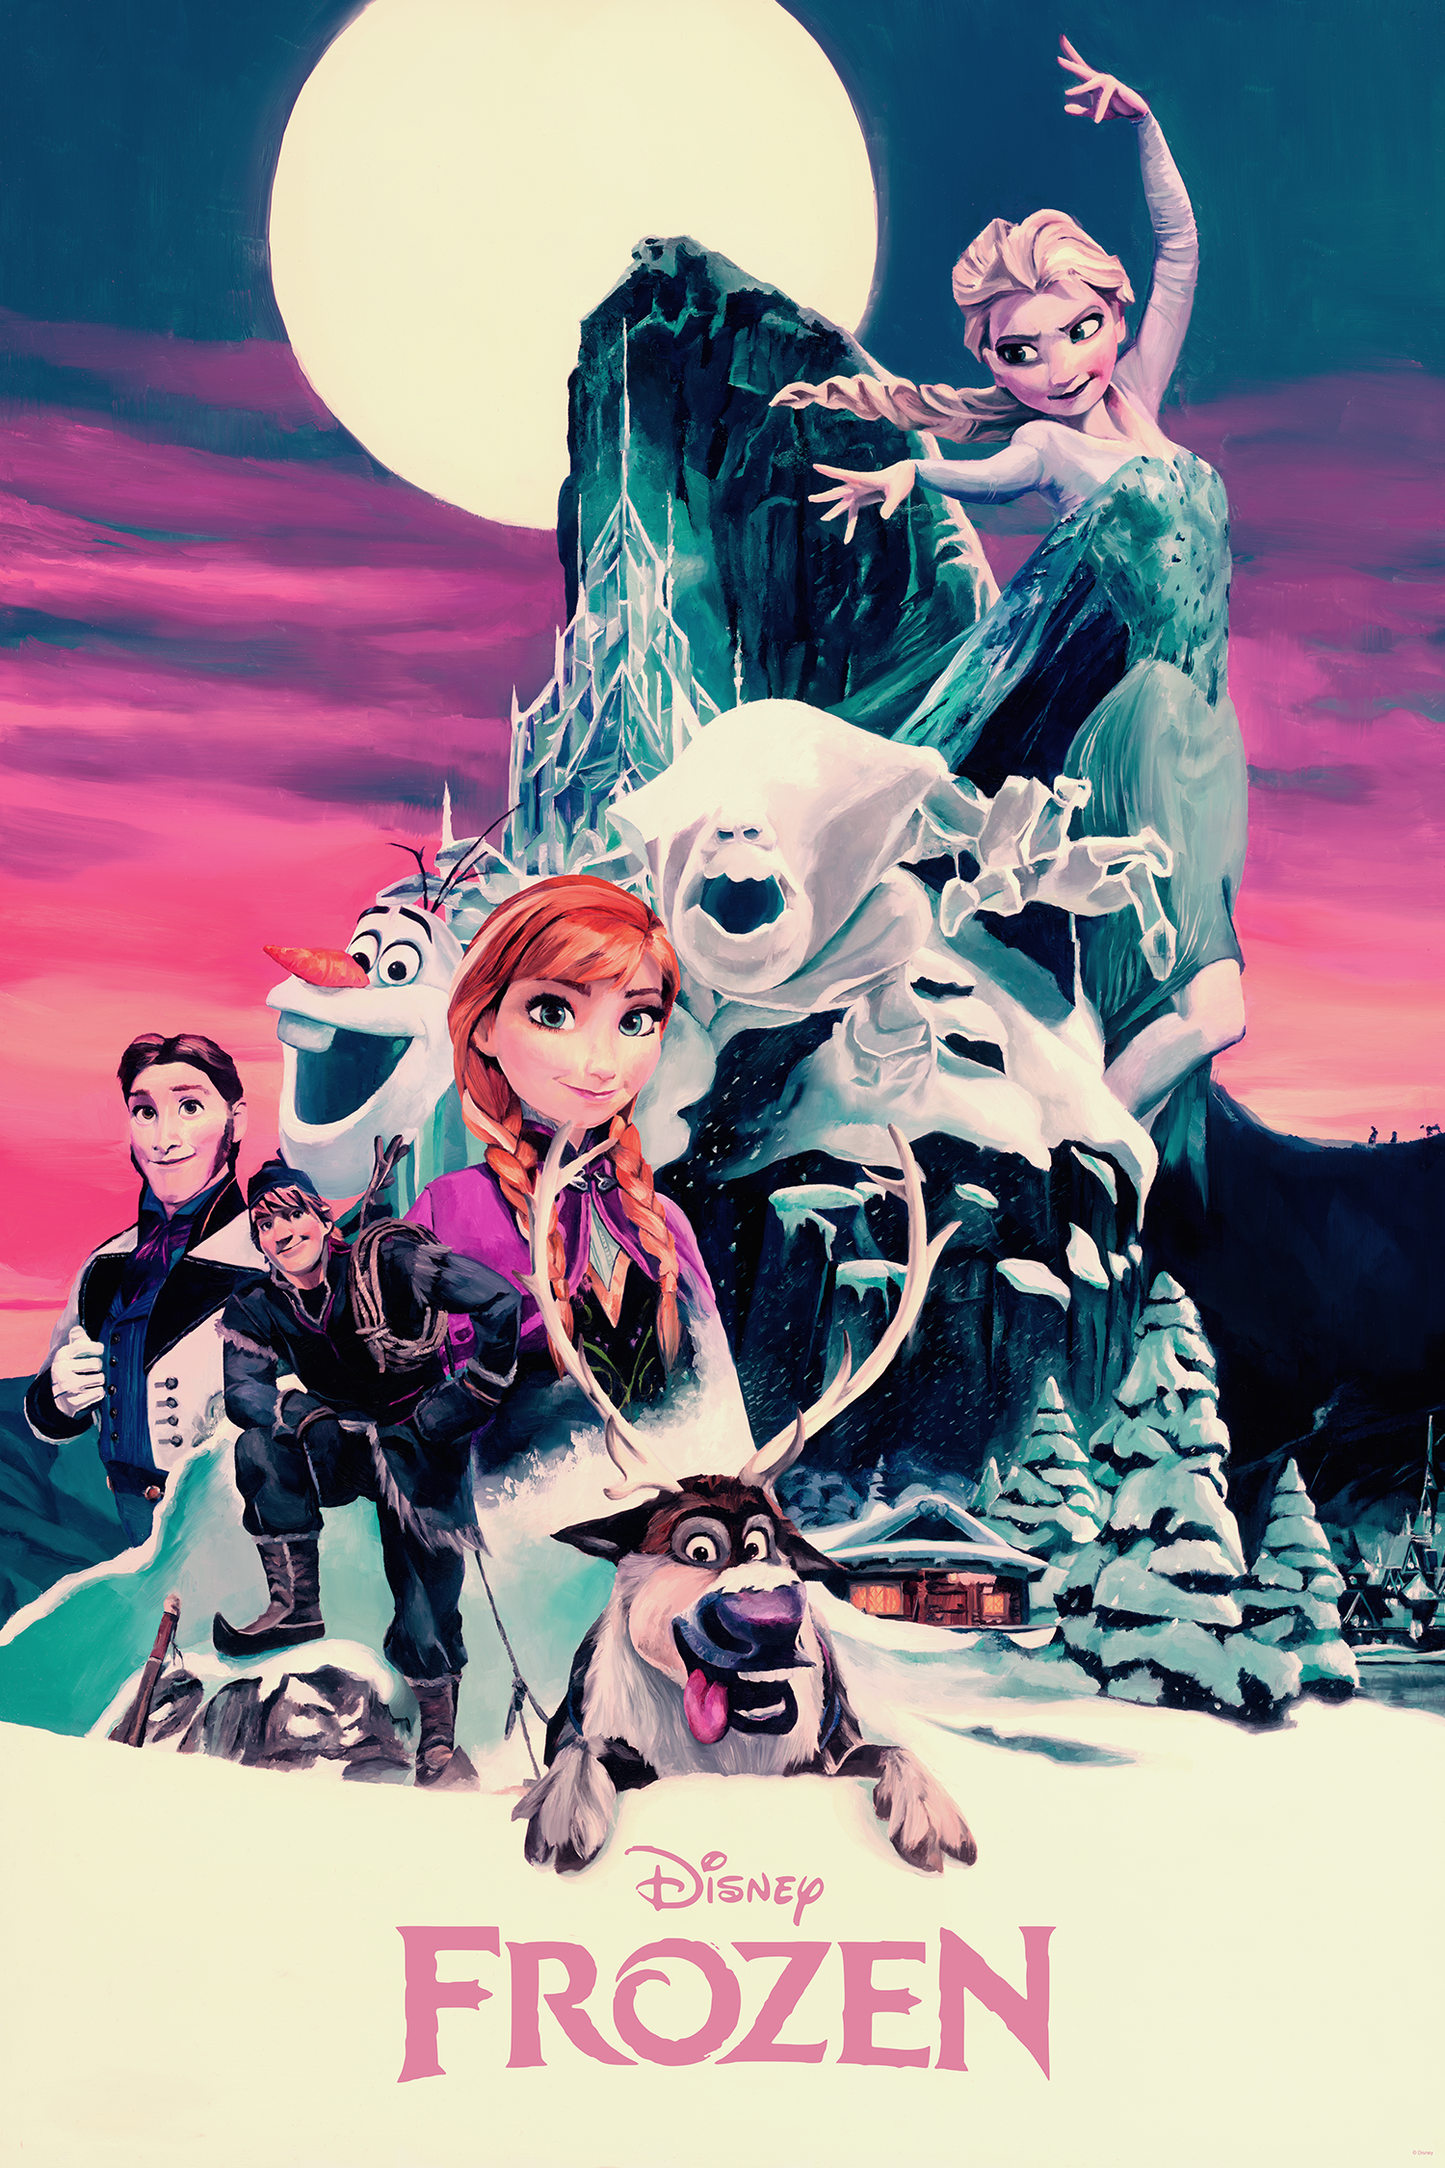 Chris Valentine "Frozen" Variant - Acrylic Panel Print